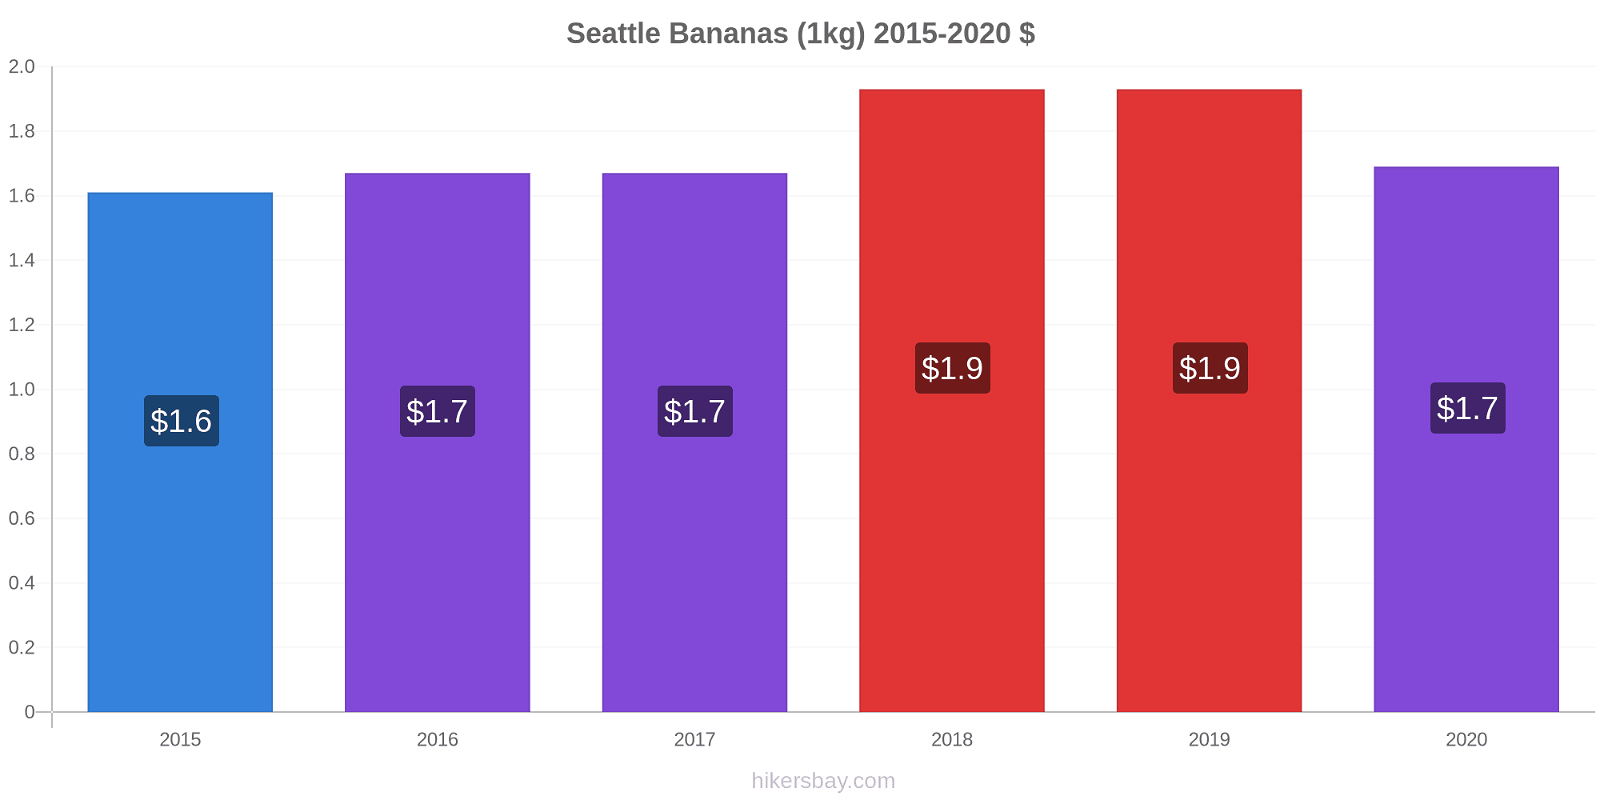 Seattle price changes Bananas (1kg) hikersbay.com